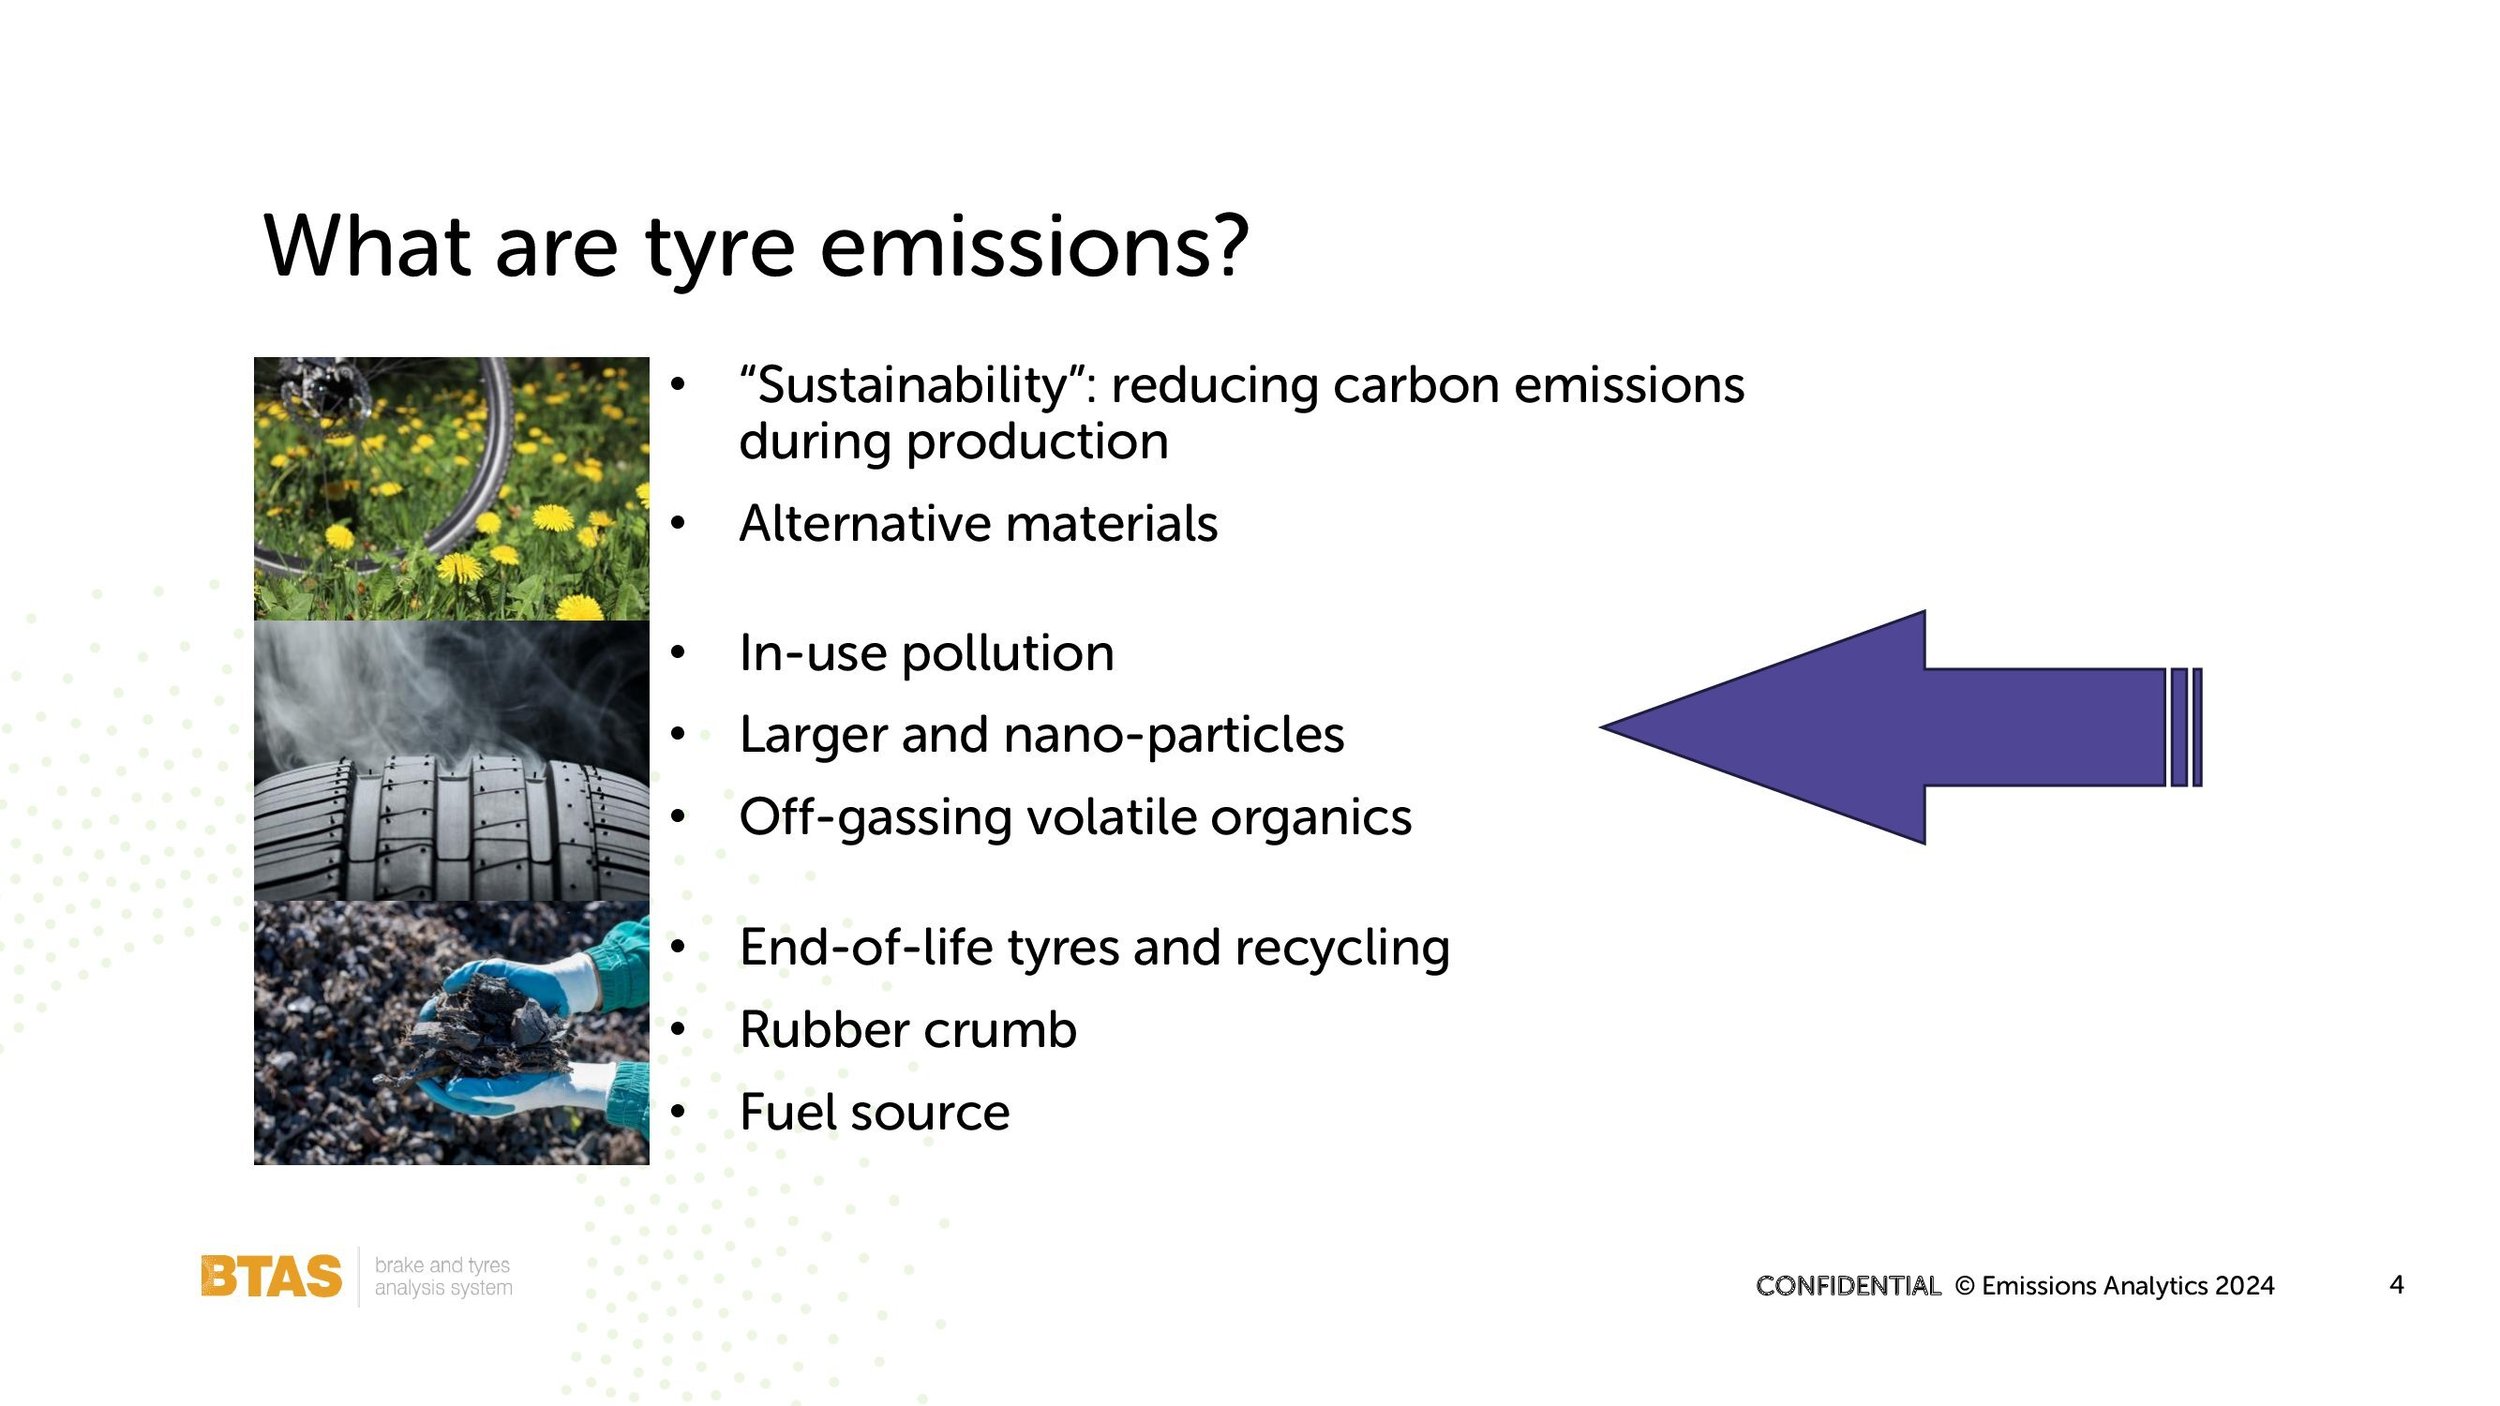 Emissions Analytics Tire Technology Expo presentation 20 March 2024_00004.jpg (Copy)